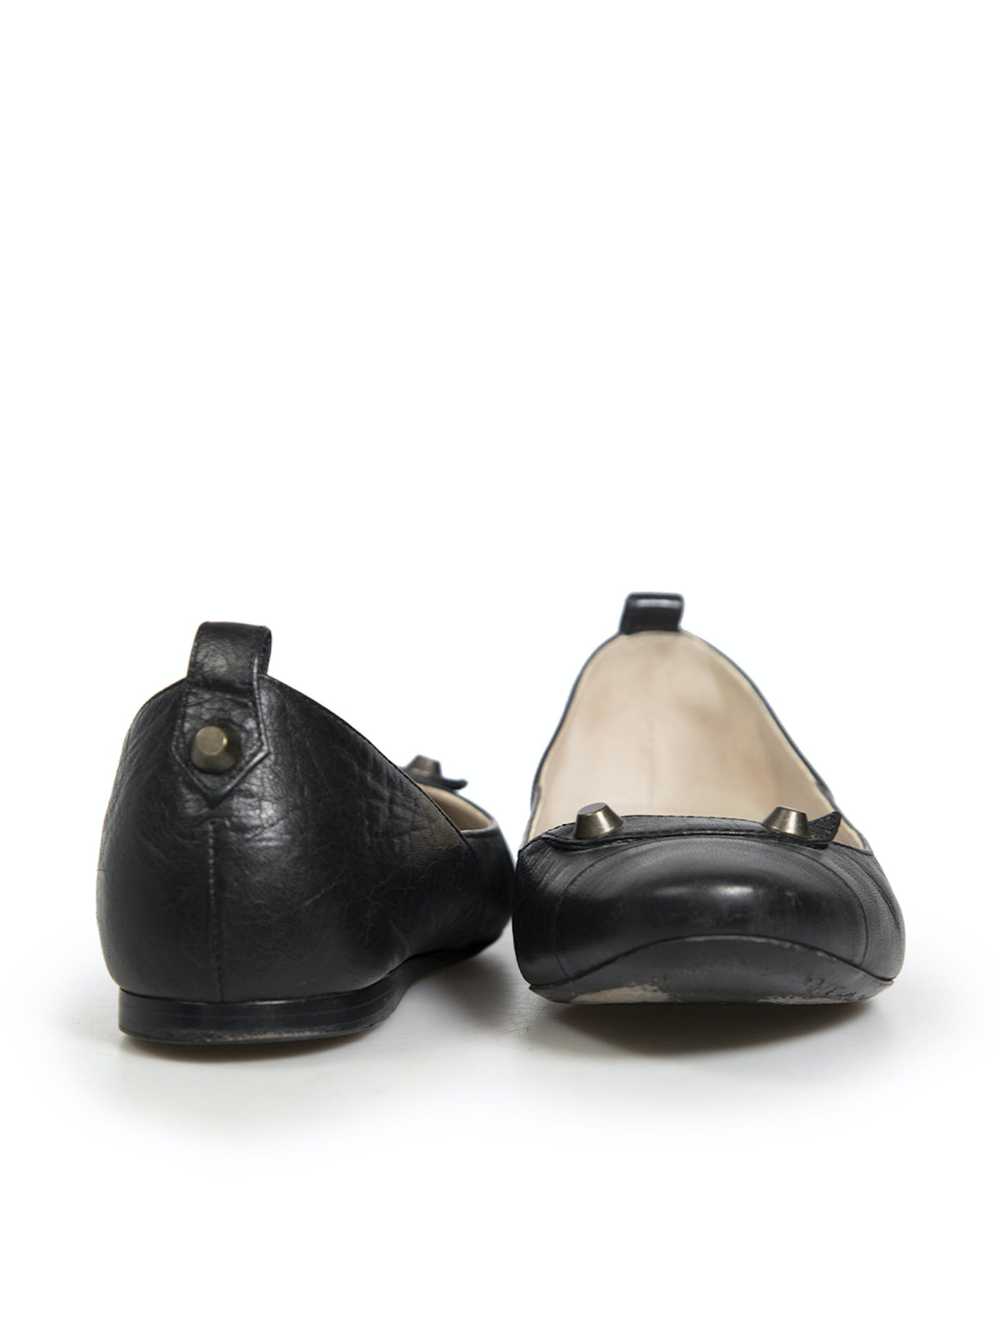 Balenciaga Black Leather Stud Detail Ballet Flats - image 3